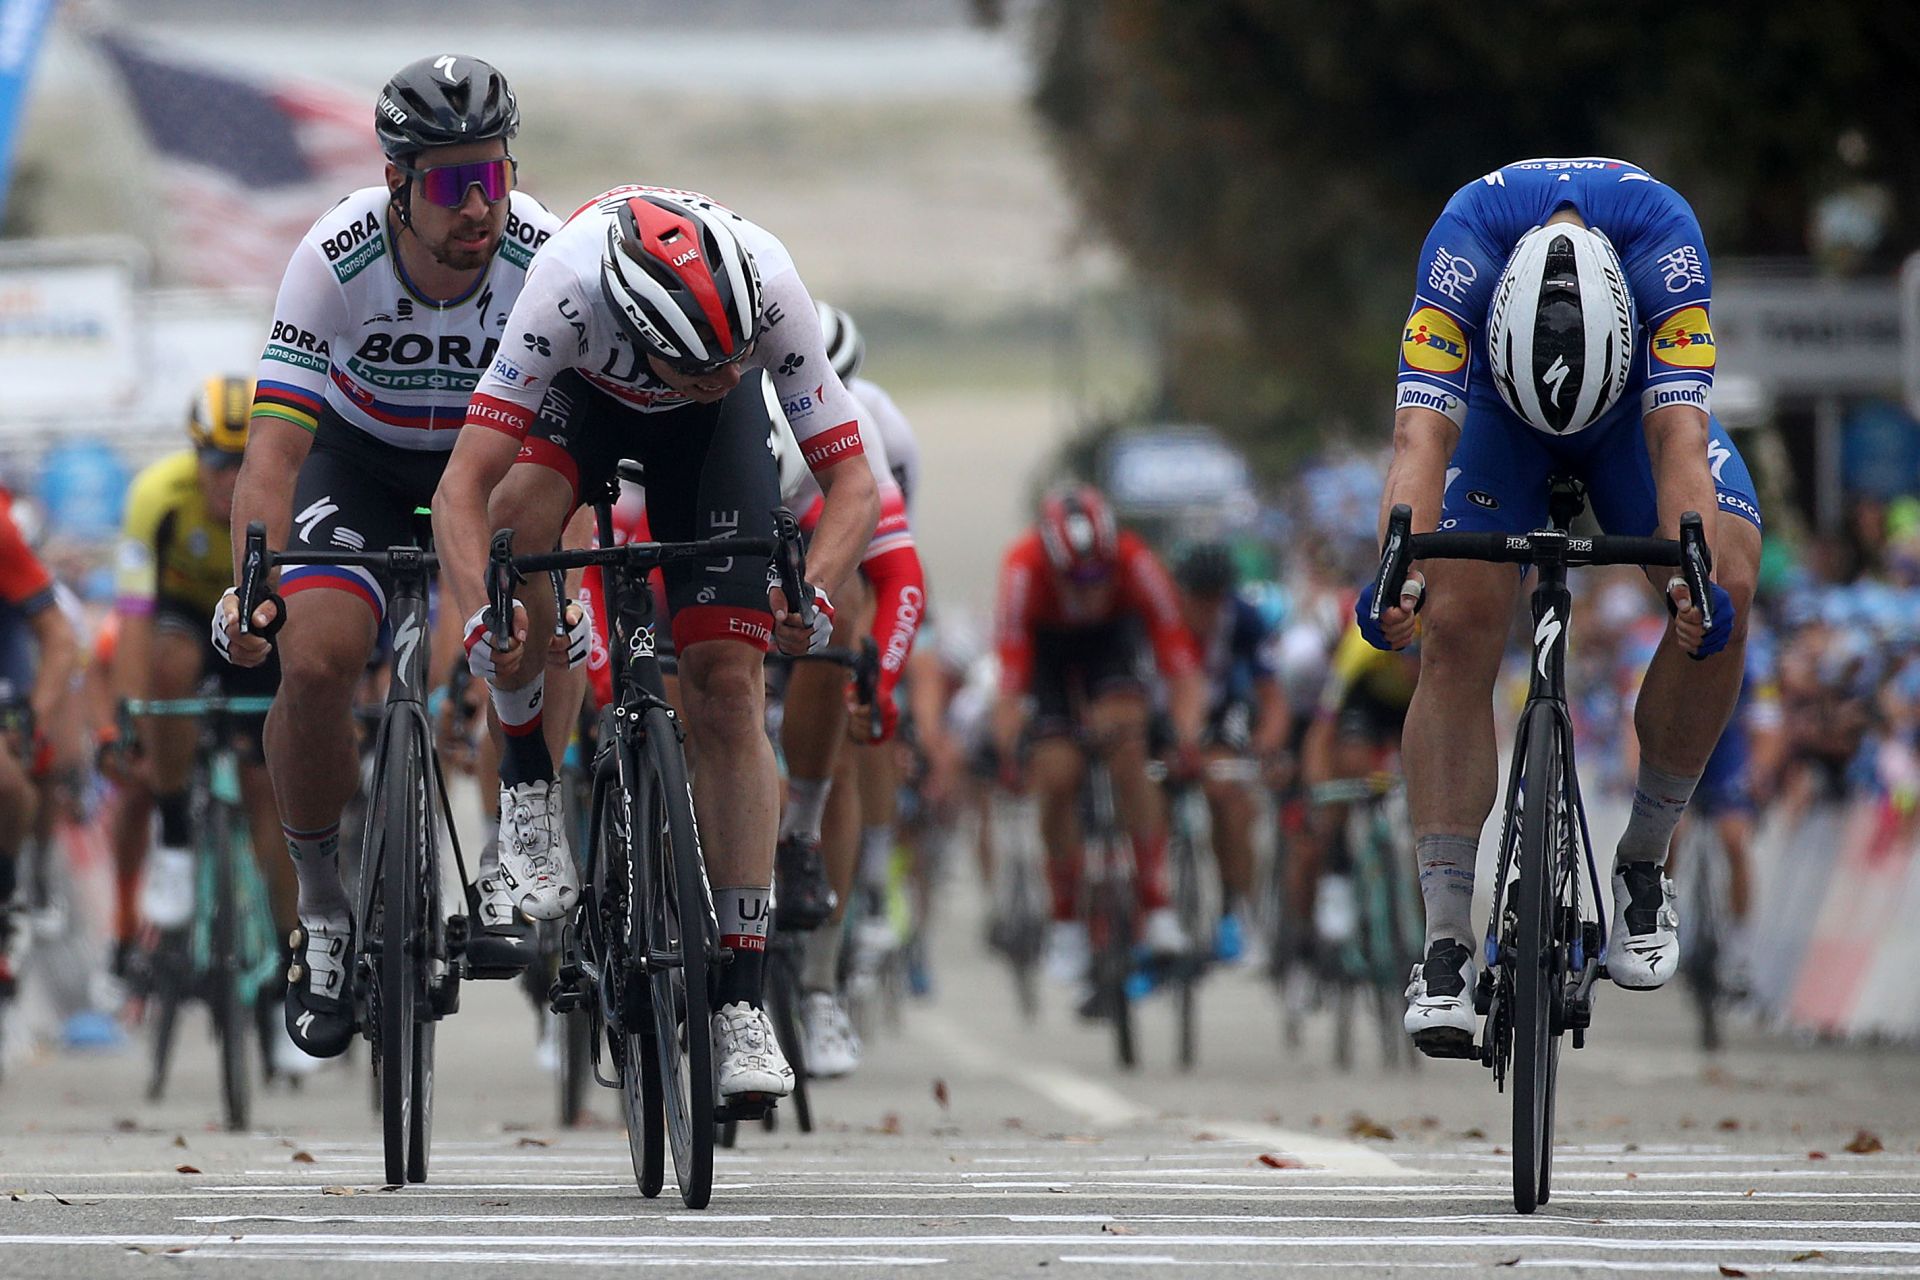 Tour of California 2019: etap 4. Fabio Jakobsen śrubuje wynik Deceuninck – Quick-Step